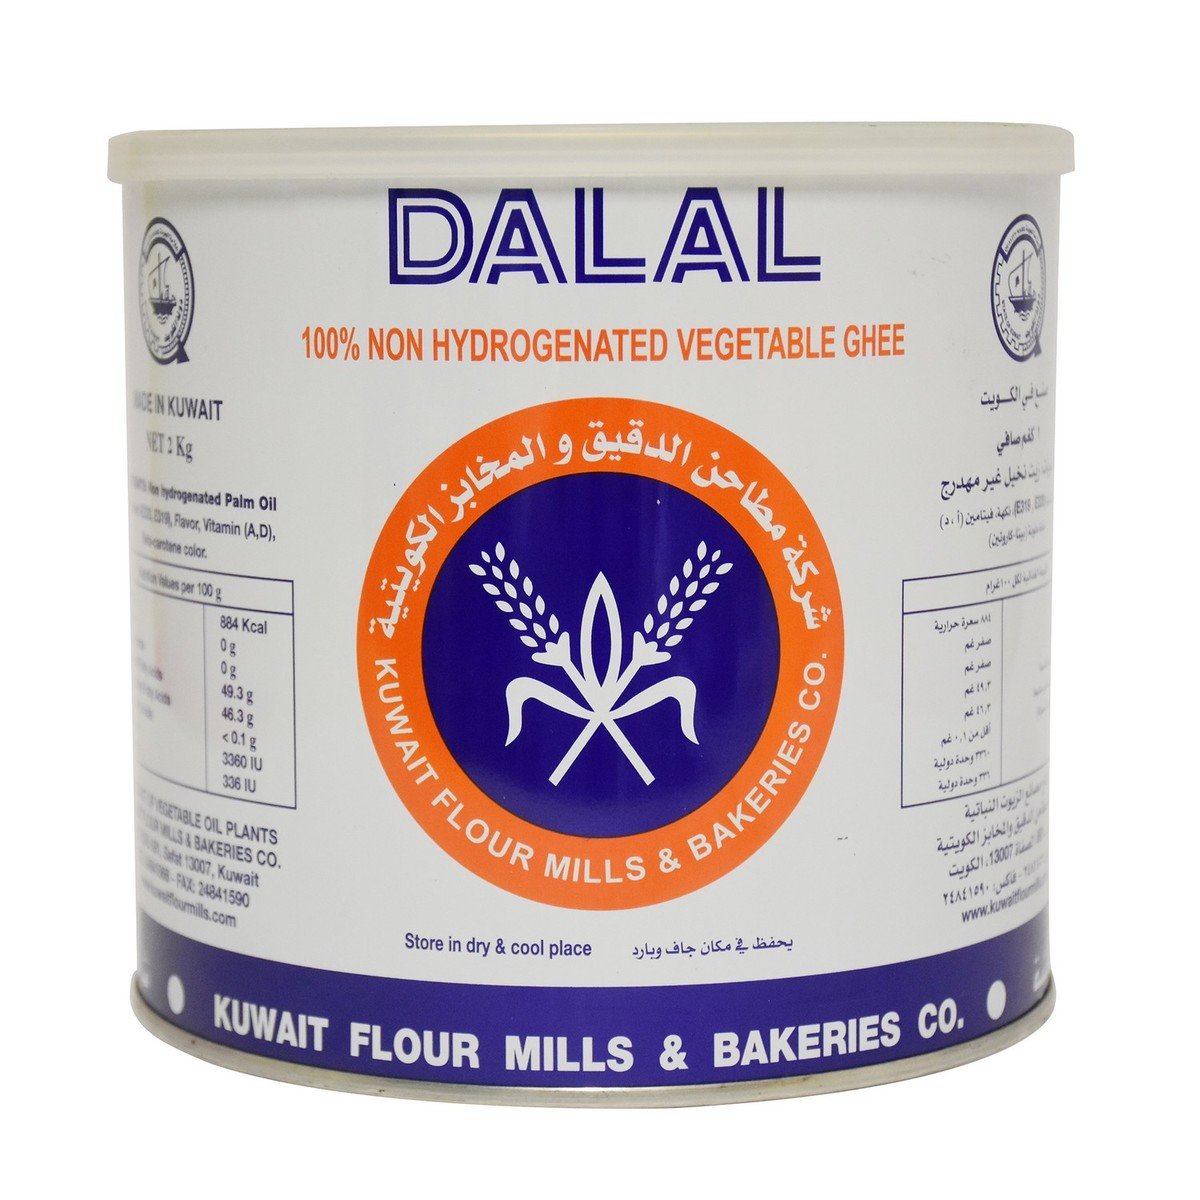 Dalal 100 Non Hydrogenated Vegetable Ghee 2kg